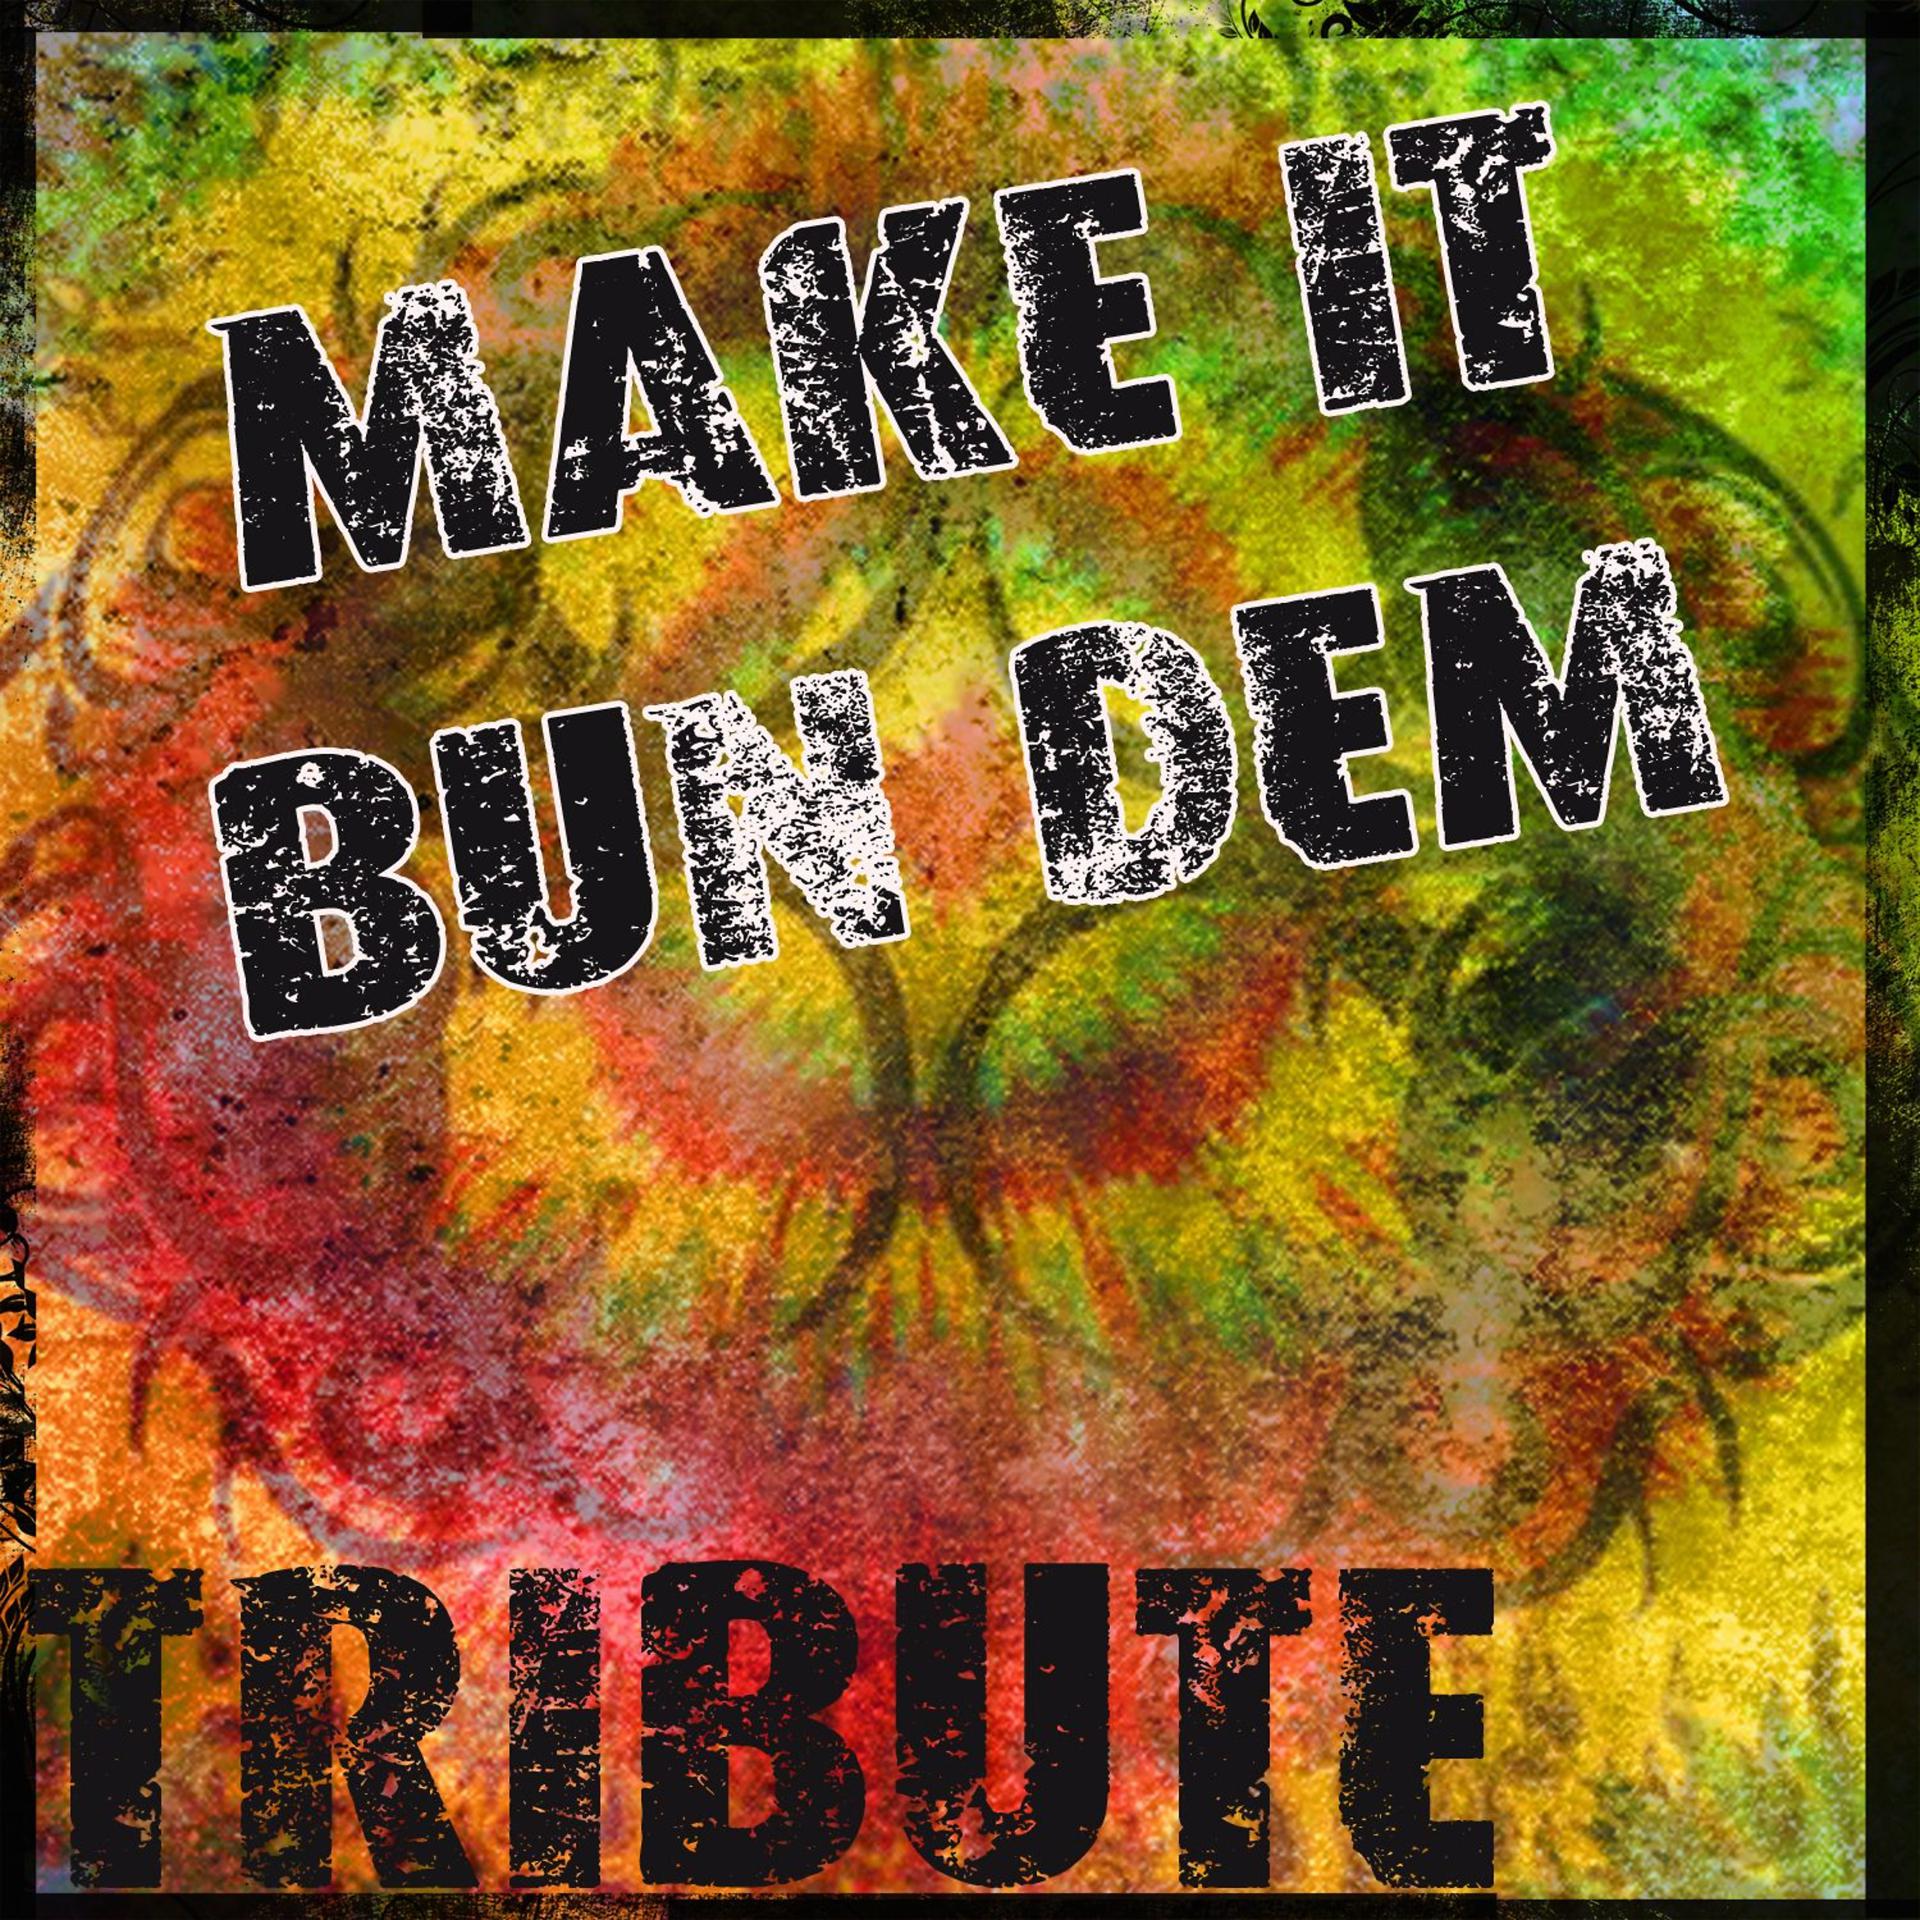 Постер альбома Make It Bun Dem (Skrillex & Damian "Jr. Gong" Marley Tribute)